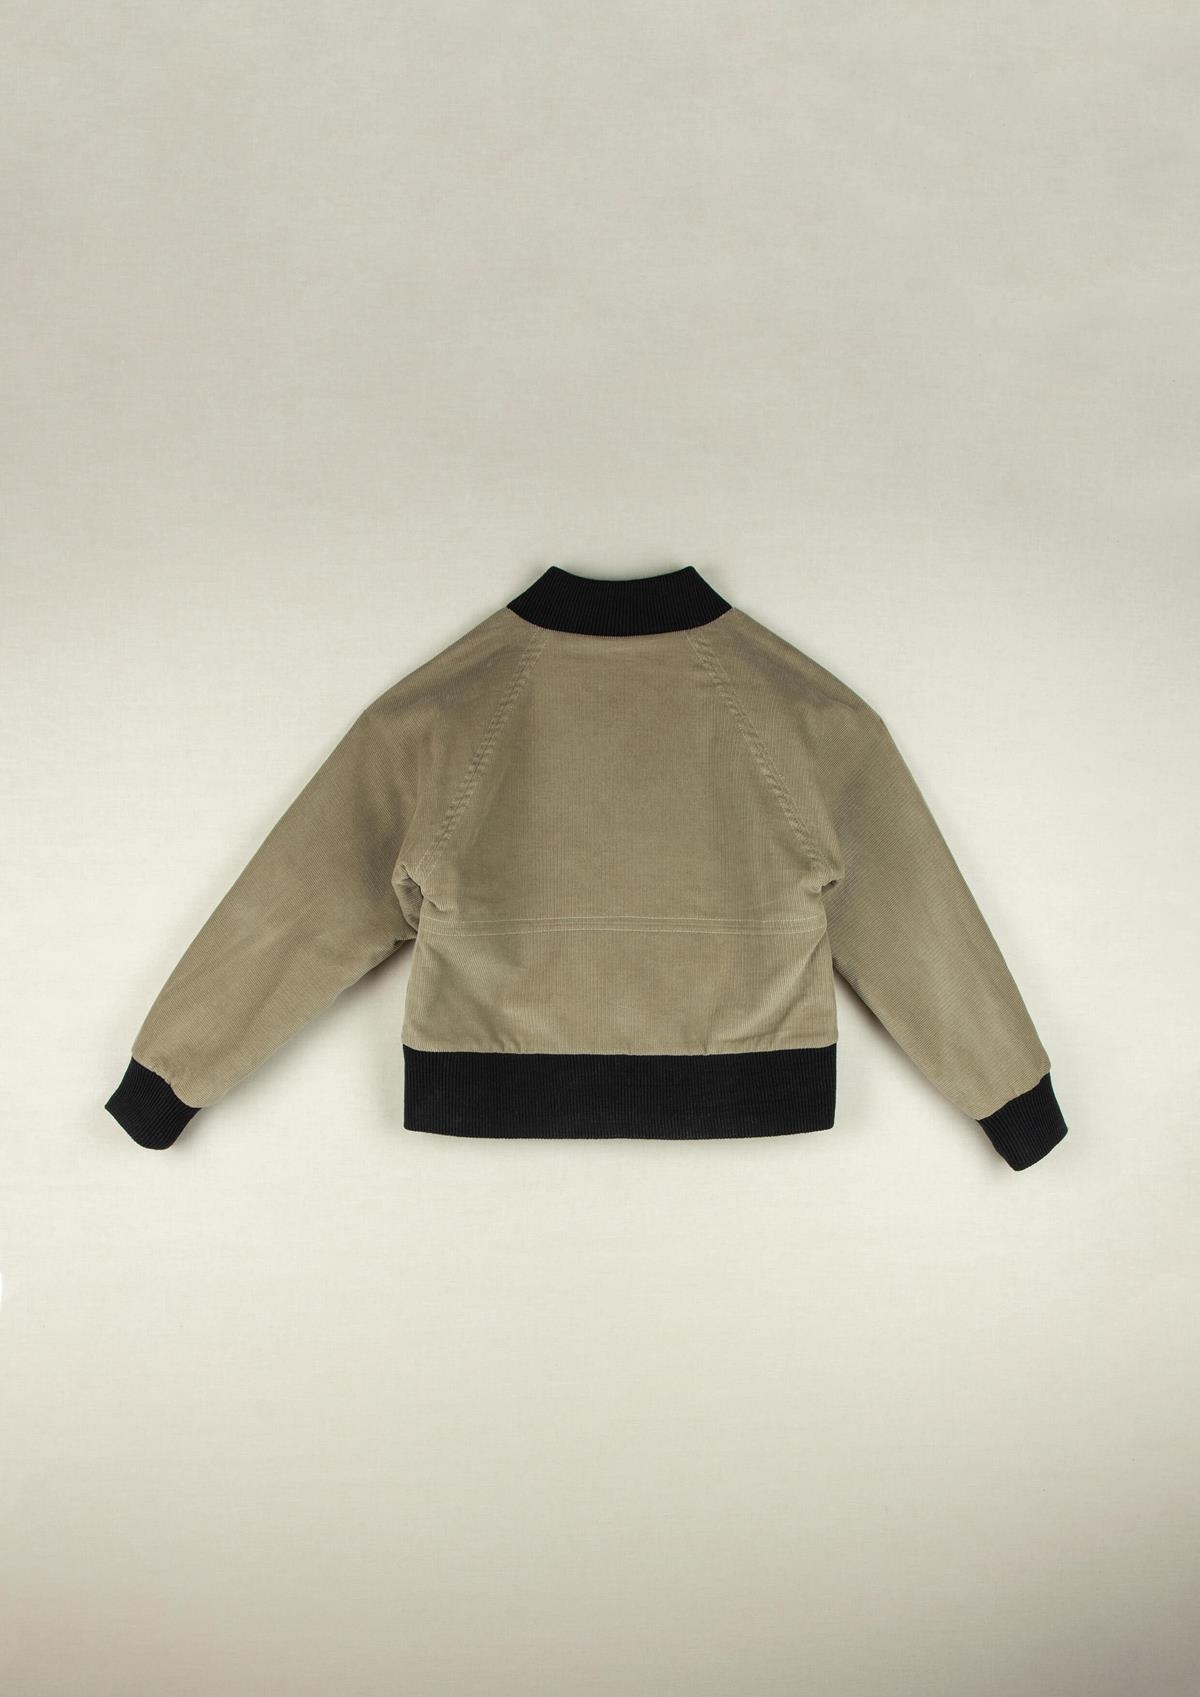 Mod.33.2 Stone knitted jacket | AW20.21 Mod.33.2 Stone knitted jacket